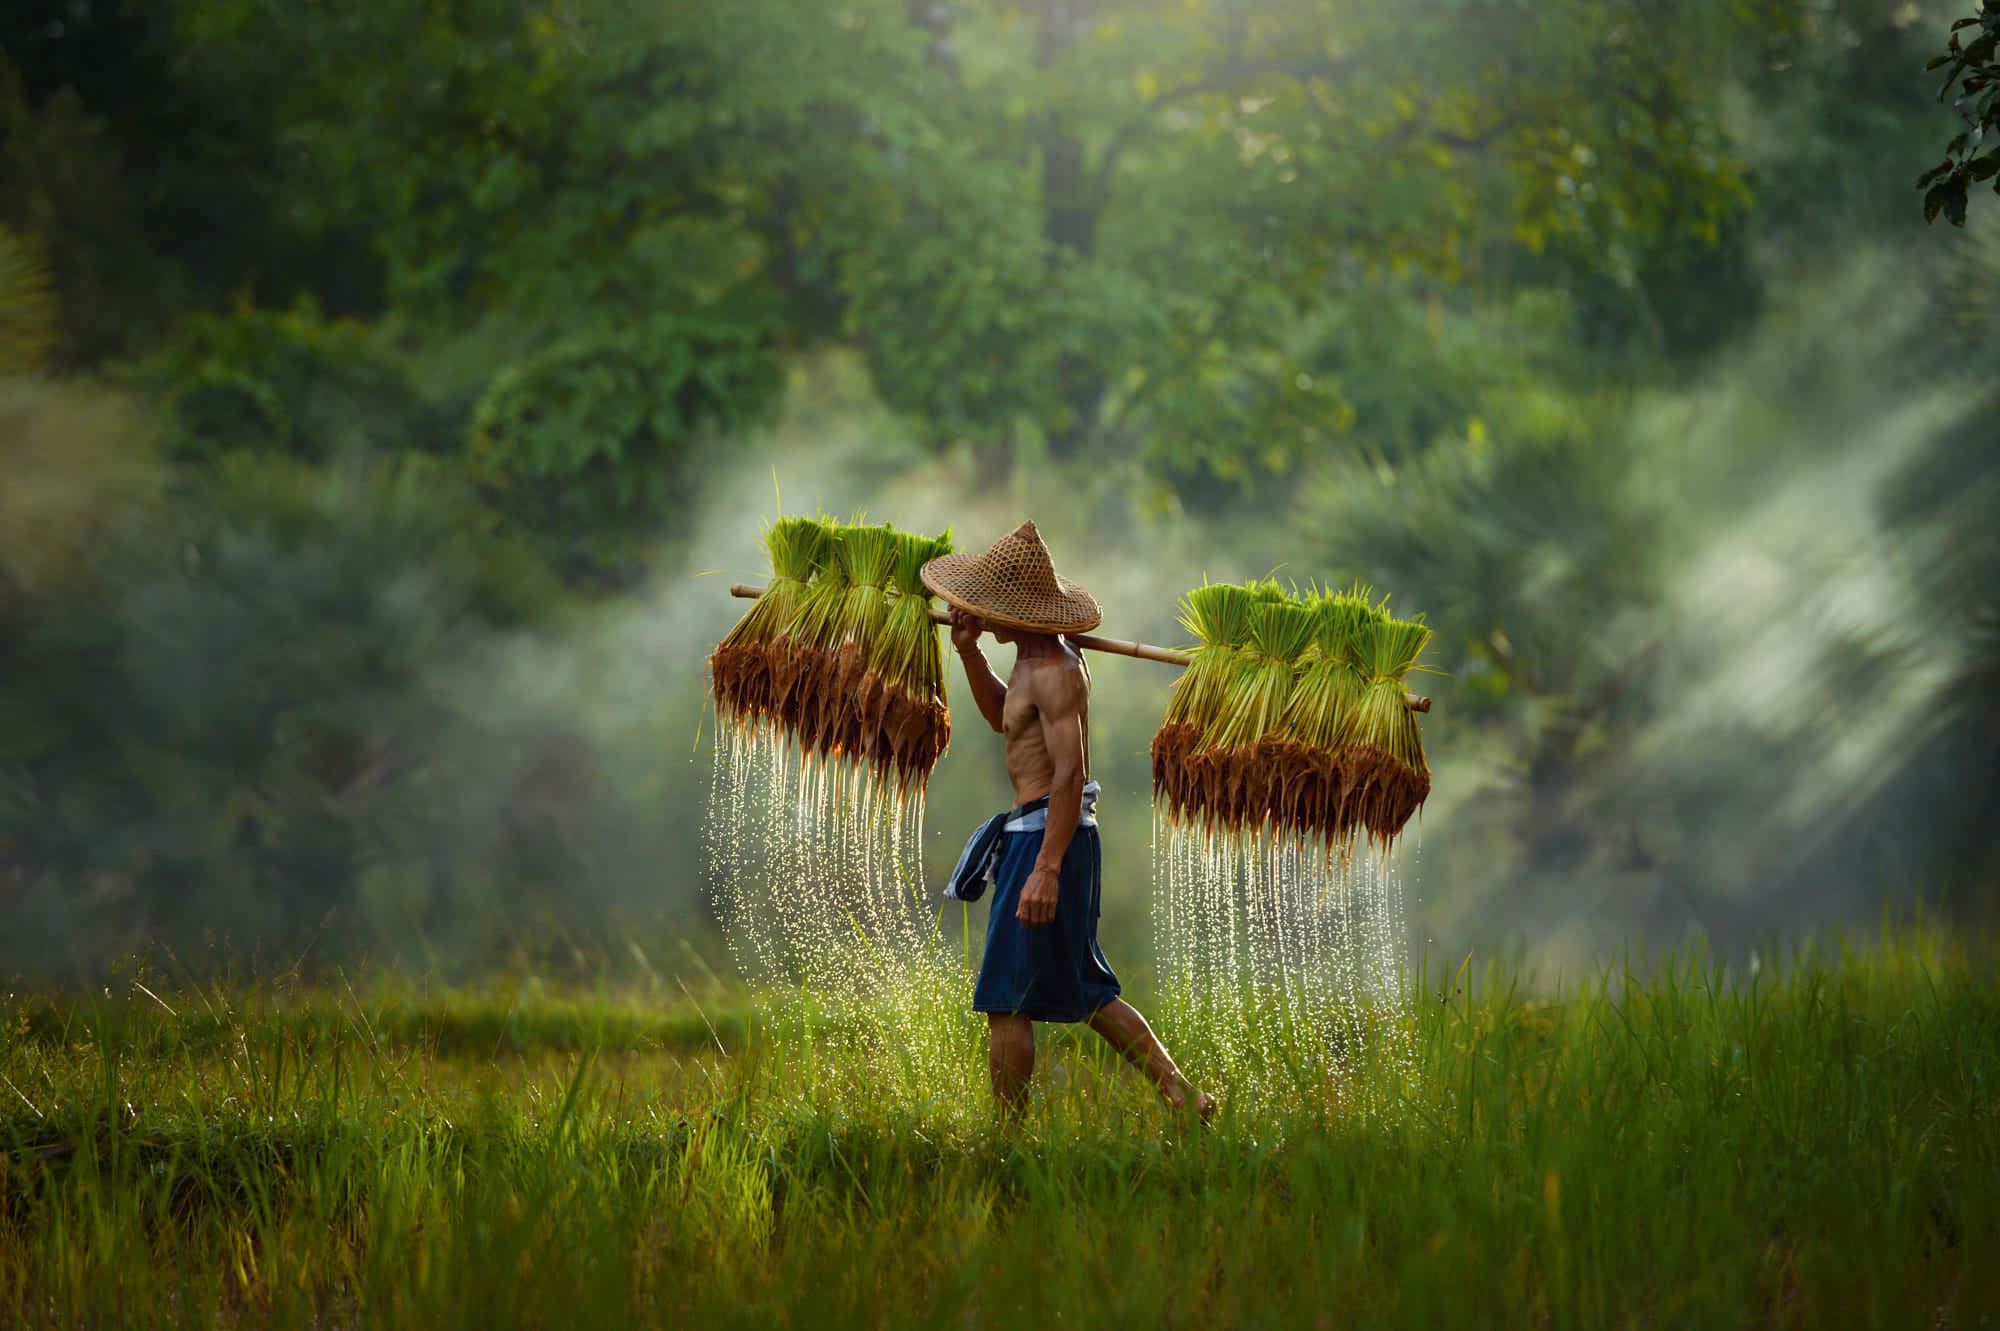 Farmer Working in a Vibrant Green Field